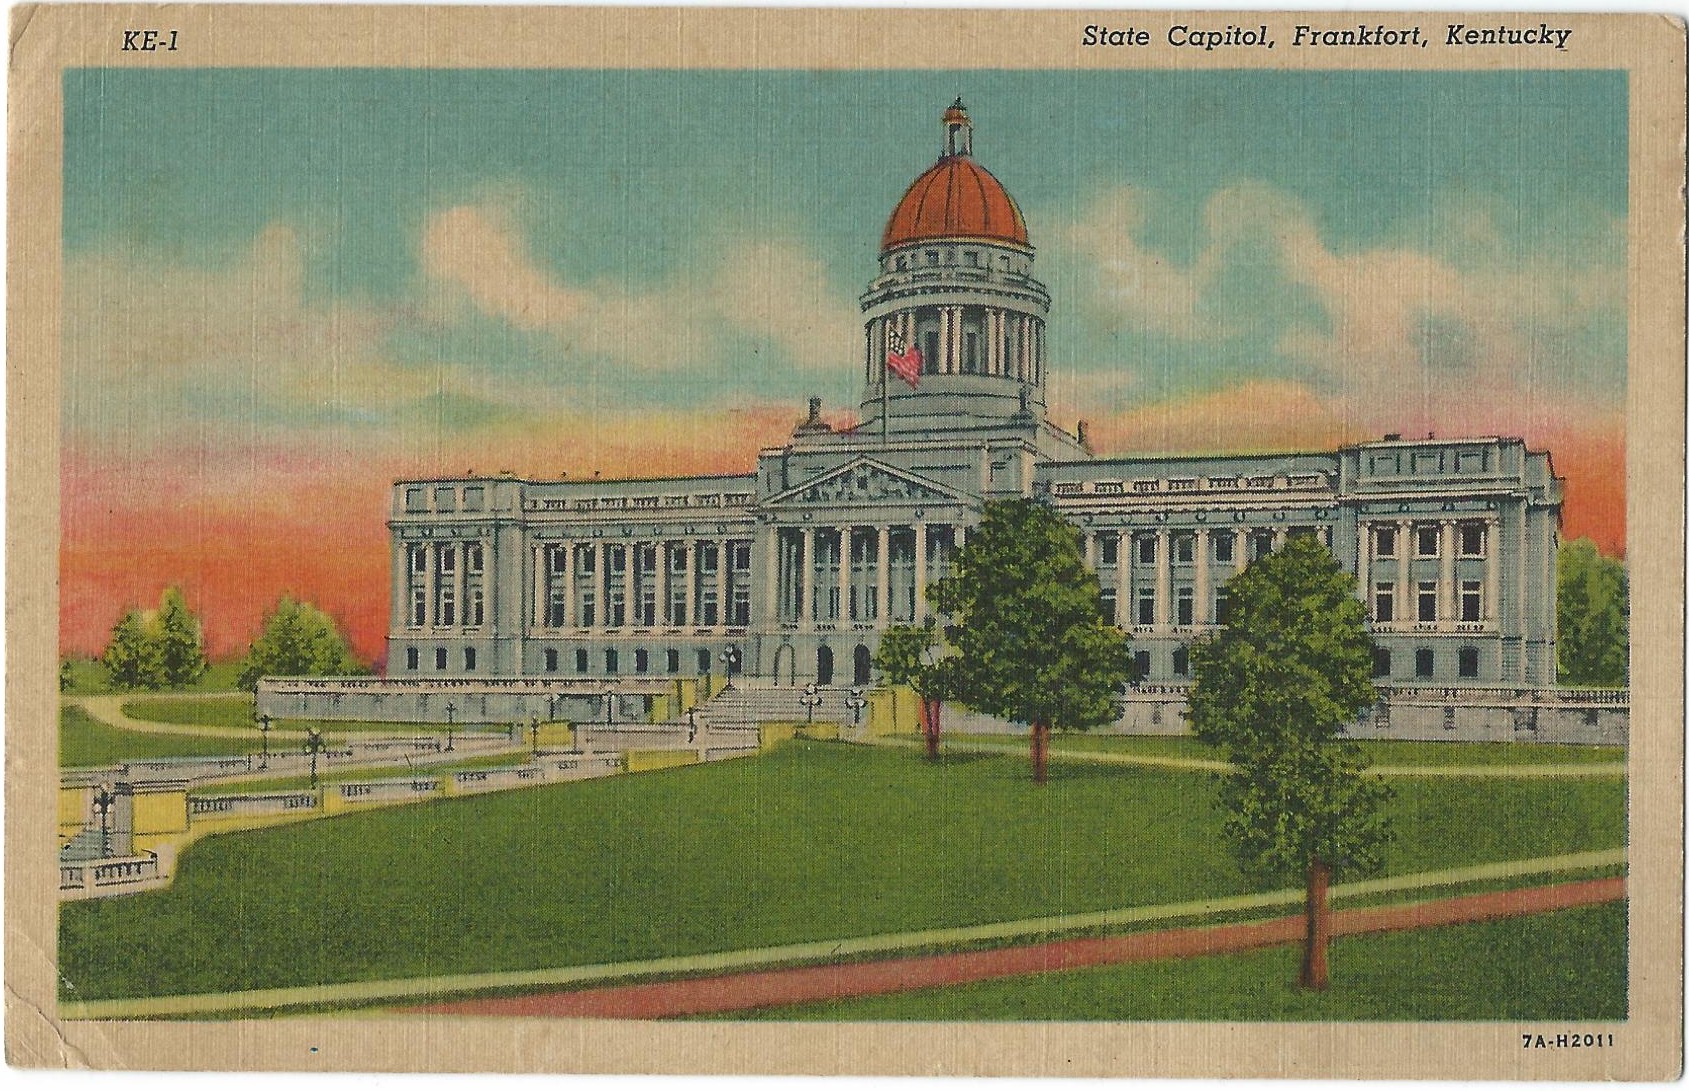 State Capitol, Franfort, Kentucky Postcard KE-1 4A-H2011 (KY)